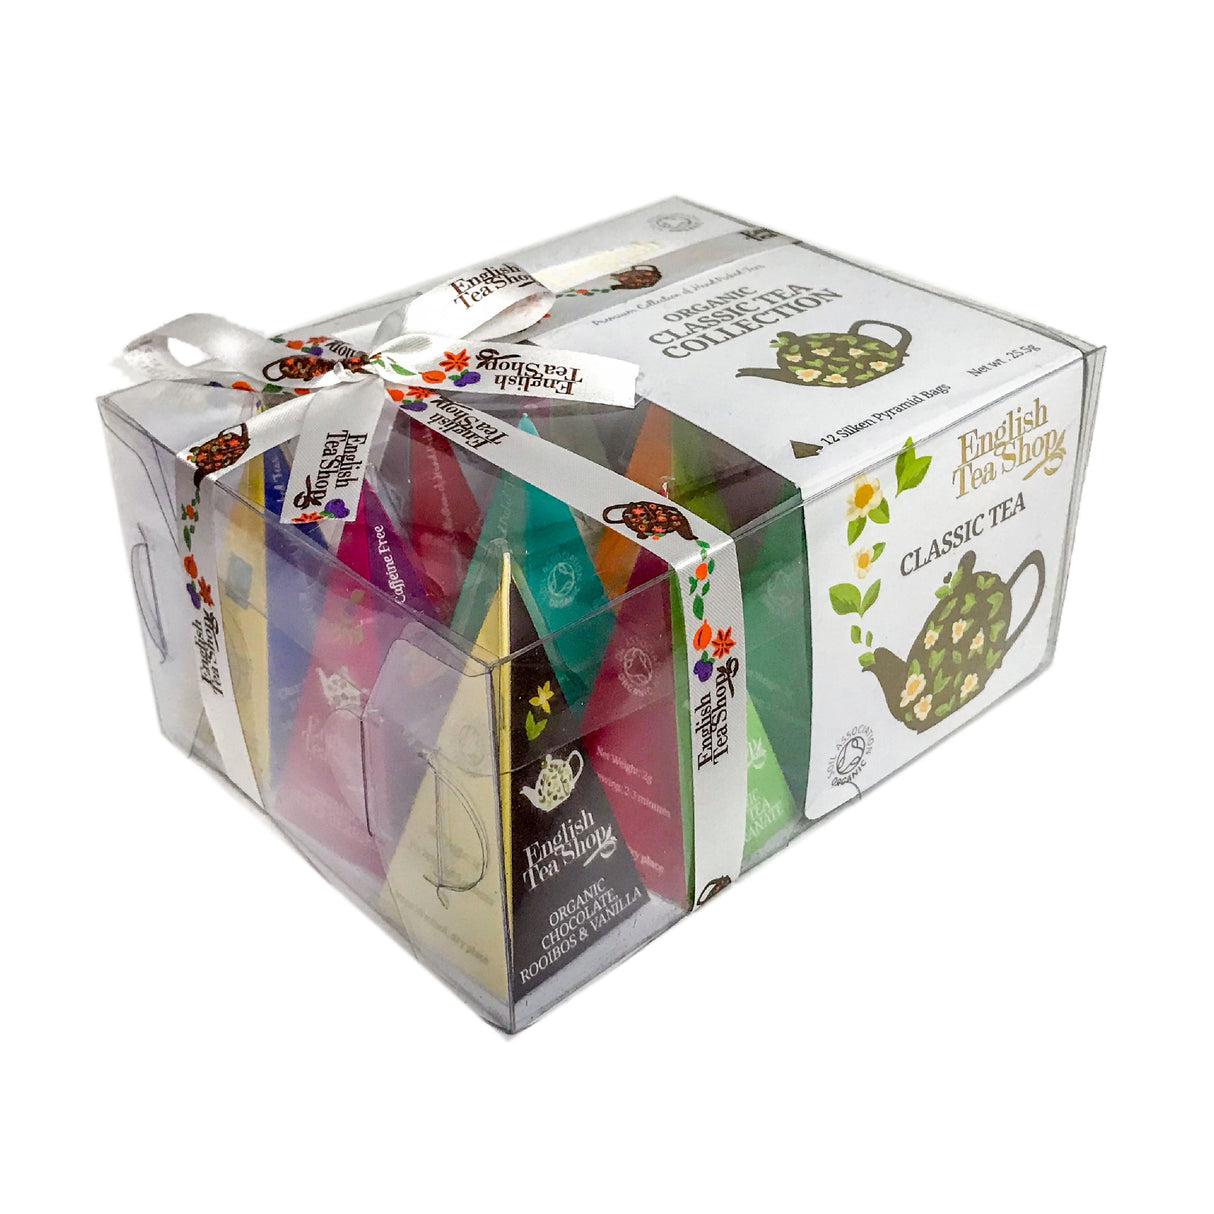 English Tea Shop Organic Classic Tea Collection Prism Teas 12x24g - Sweet Victory Products Ltd